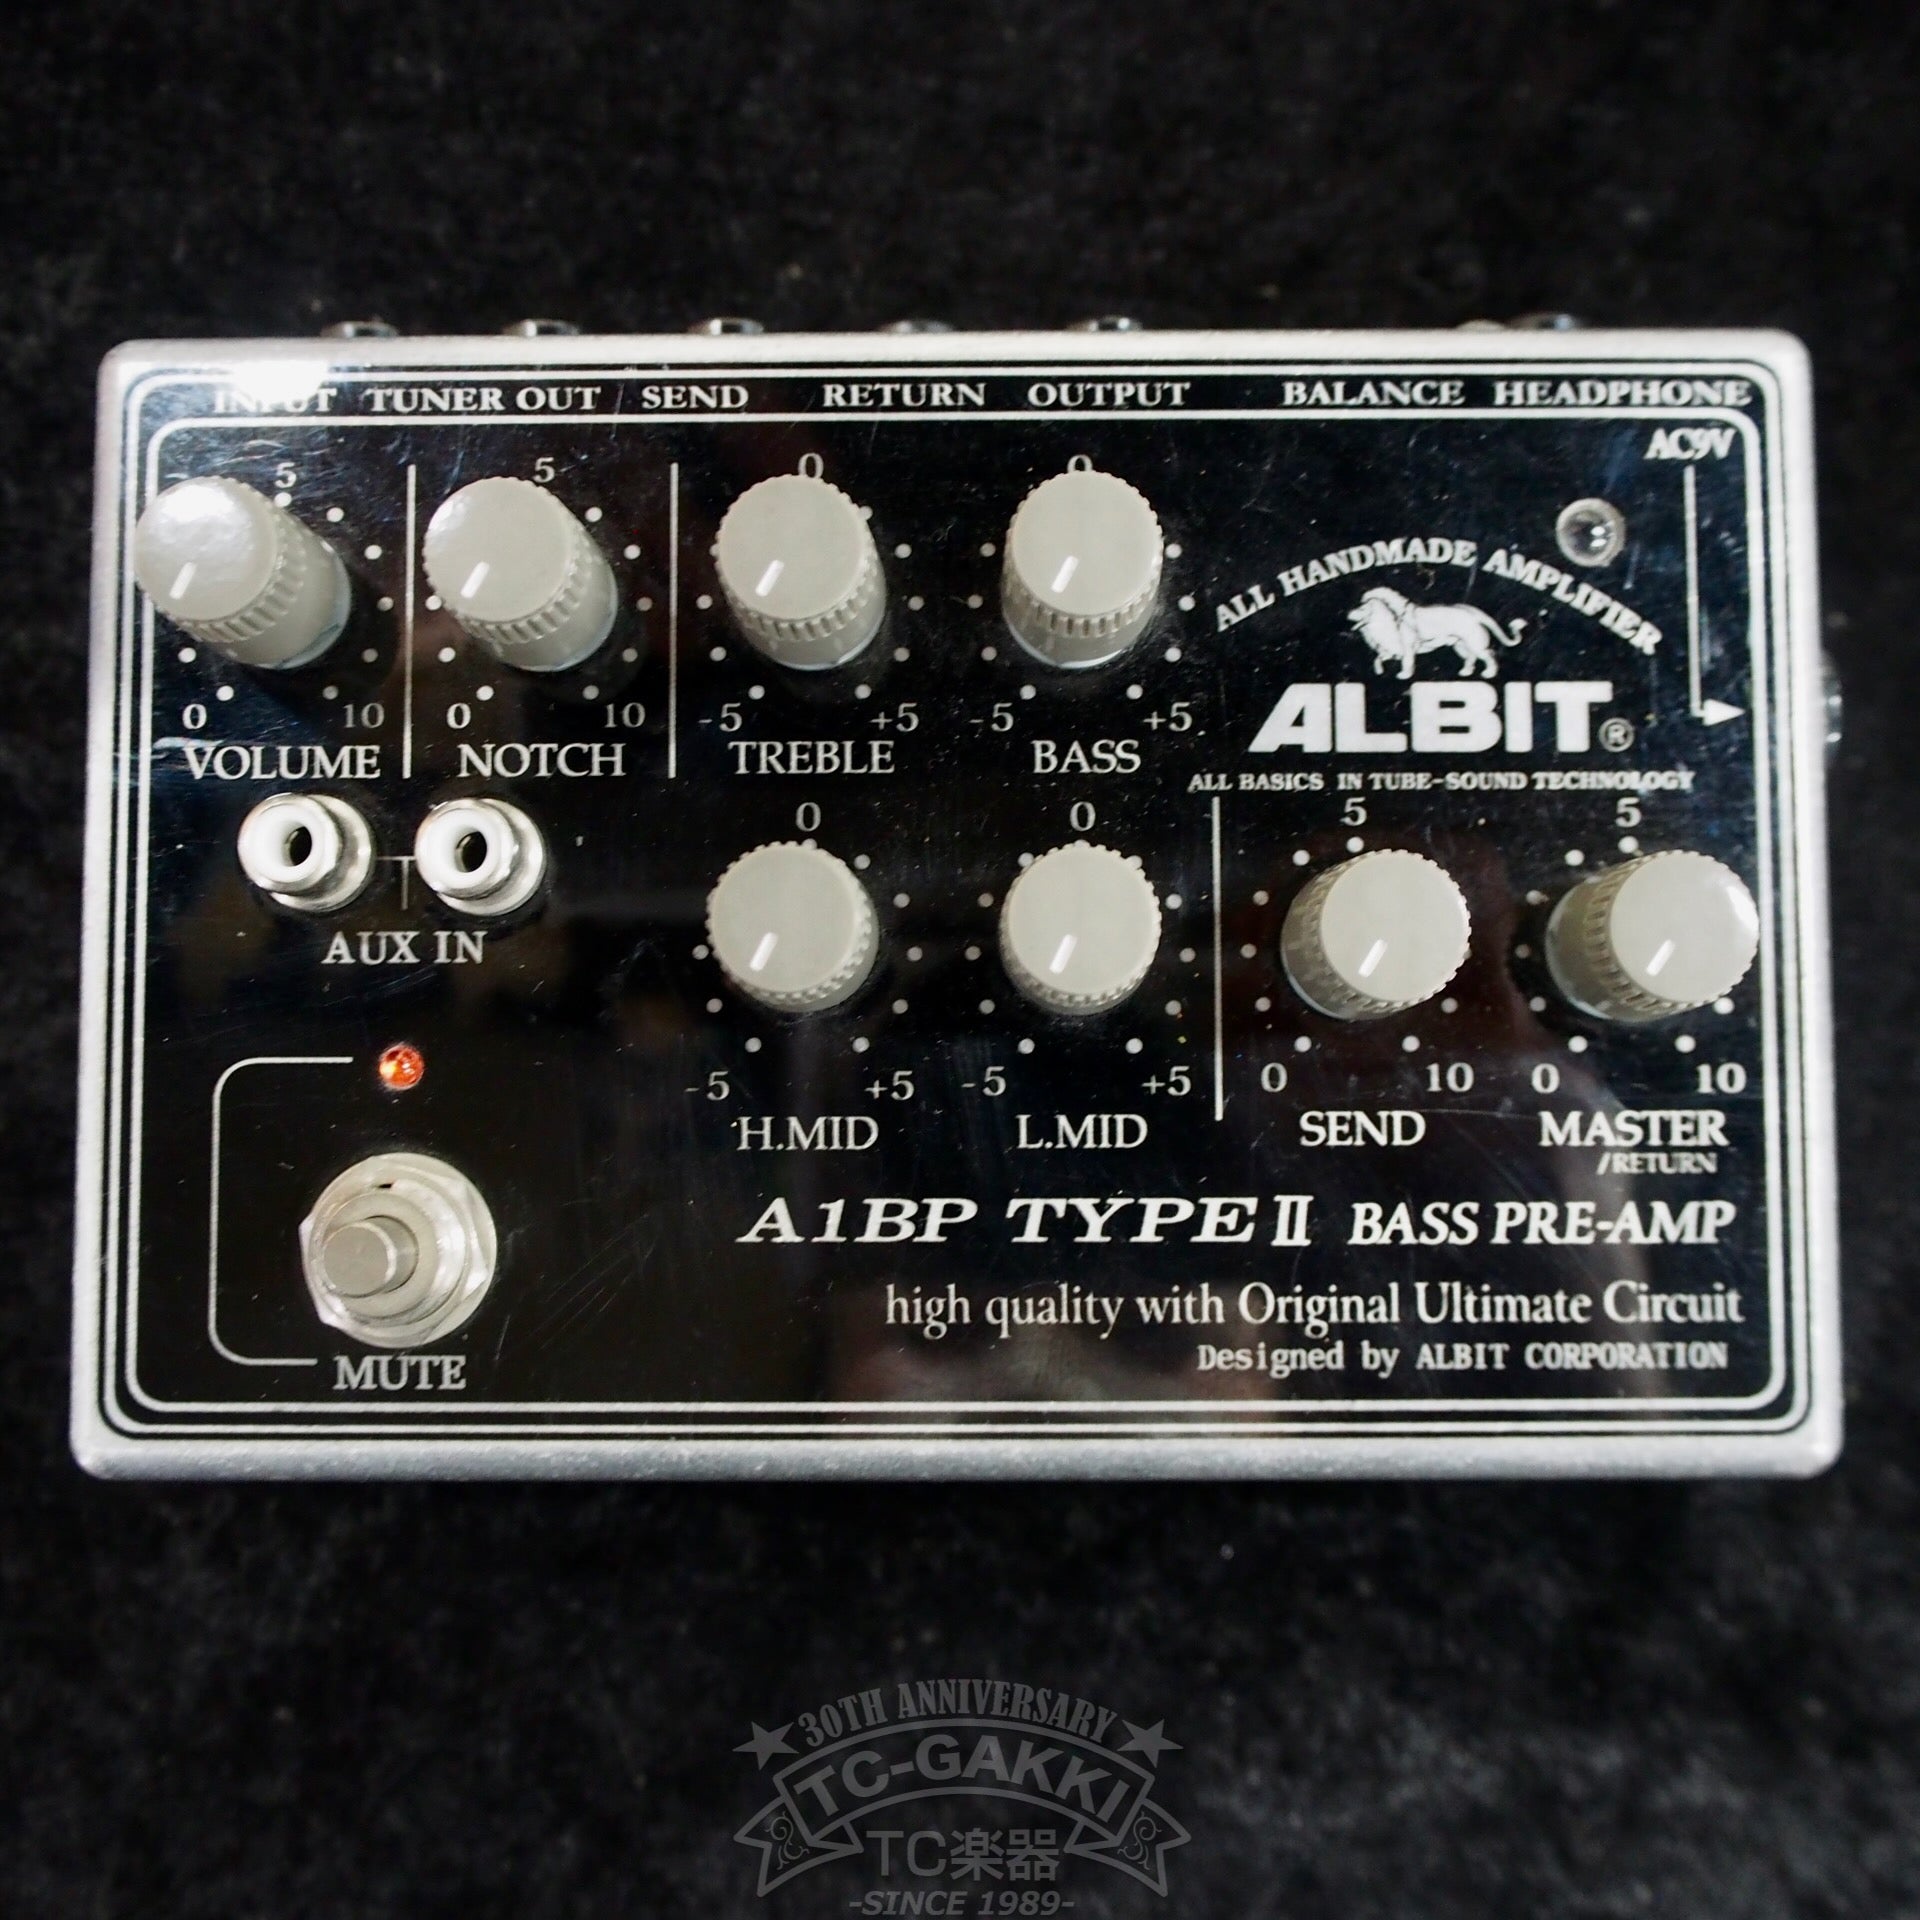 A1BP TYPE II BASS PRE-AMP